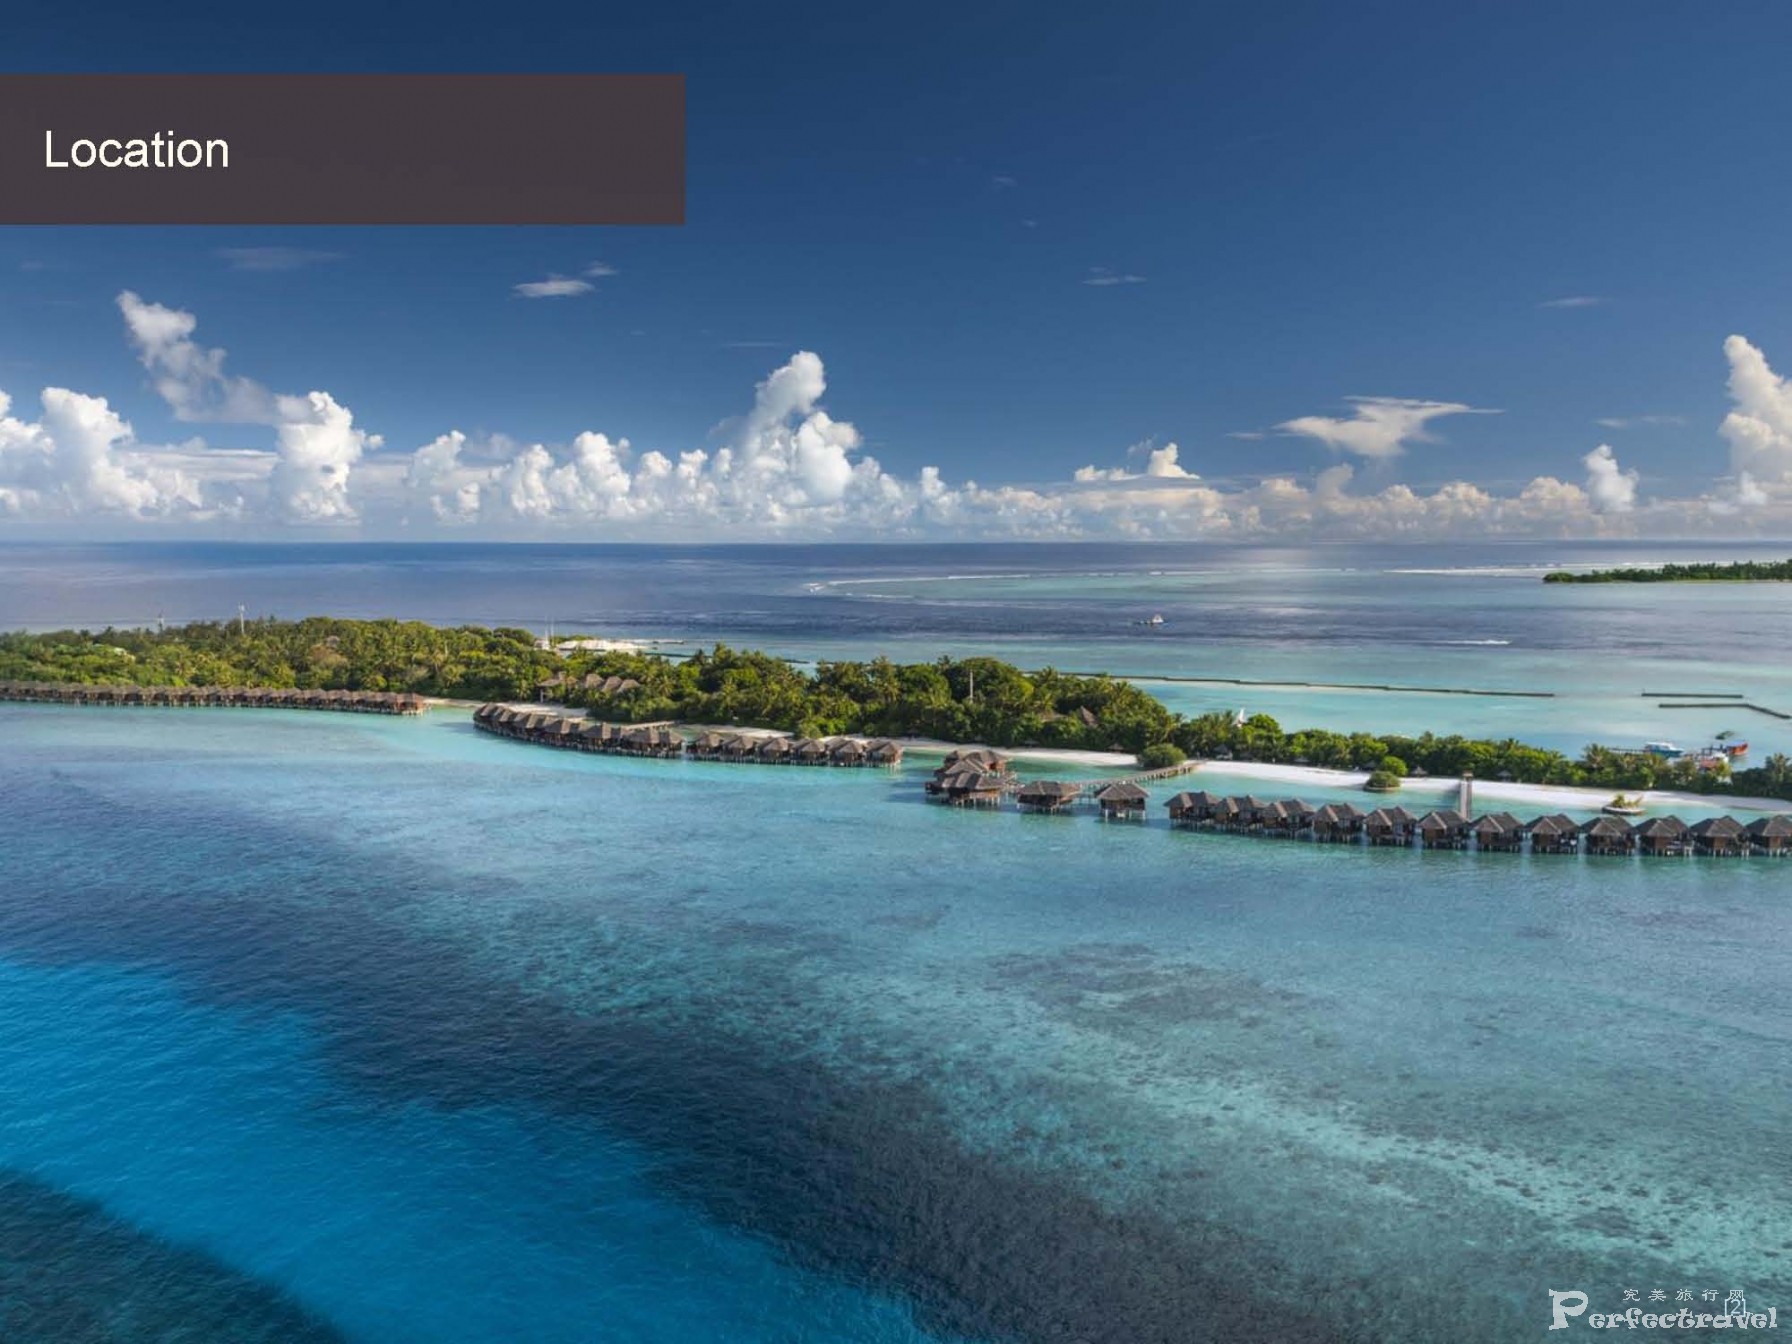 Sheraton Maldives - Overview Presentation 2015_Page_02.jpg